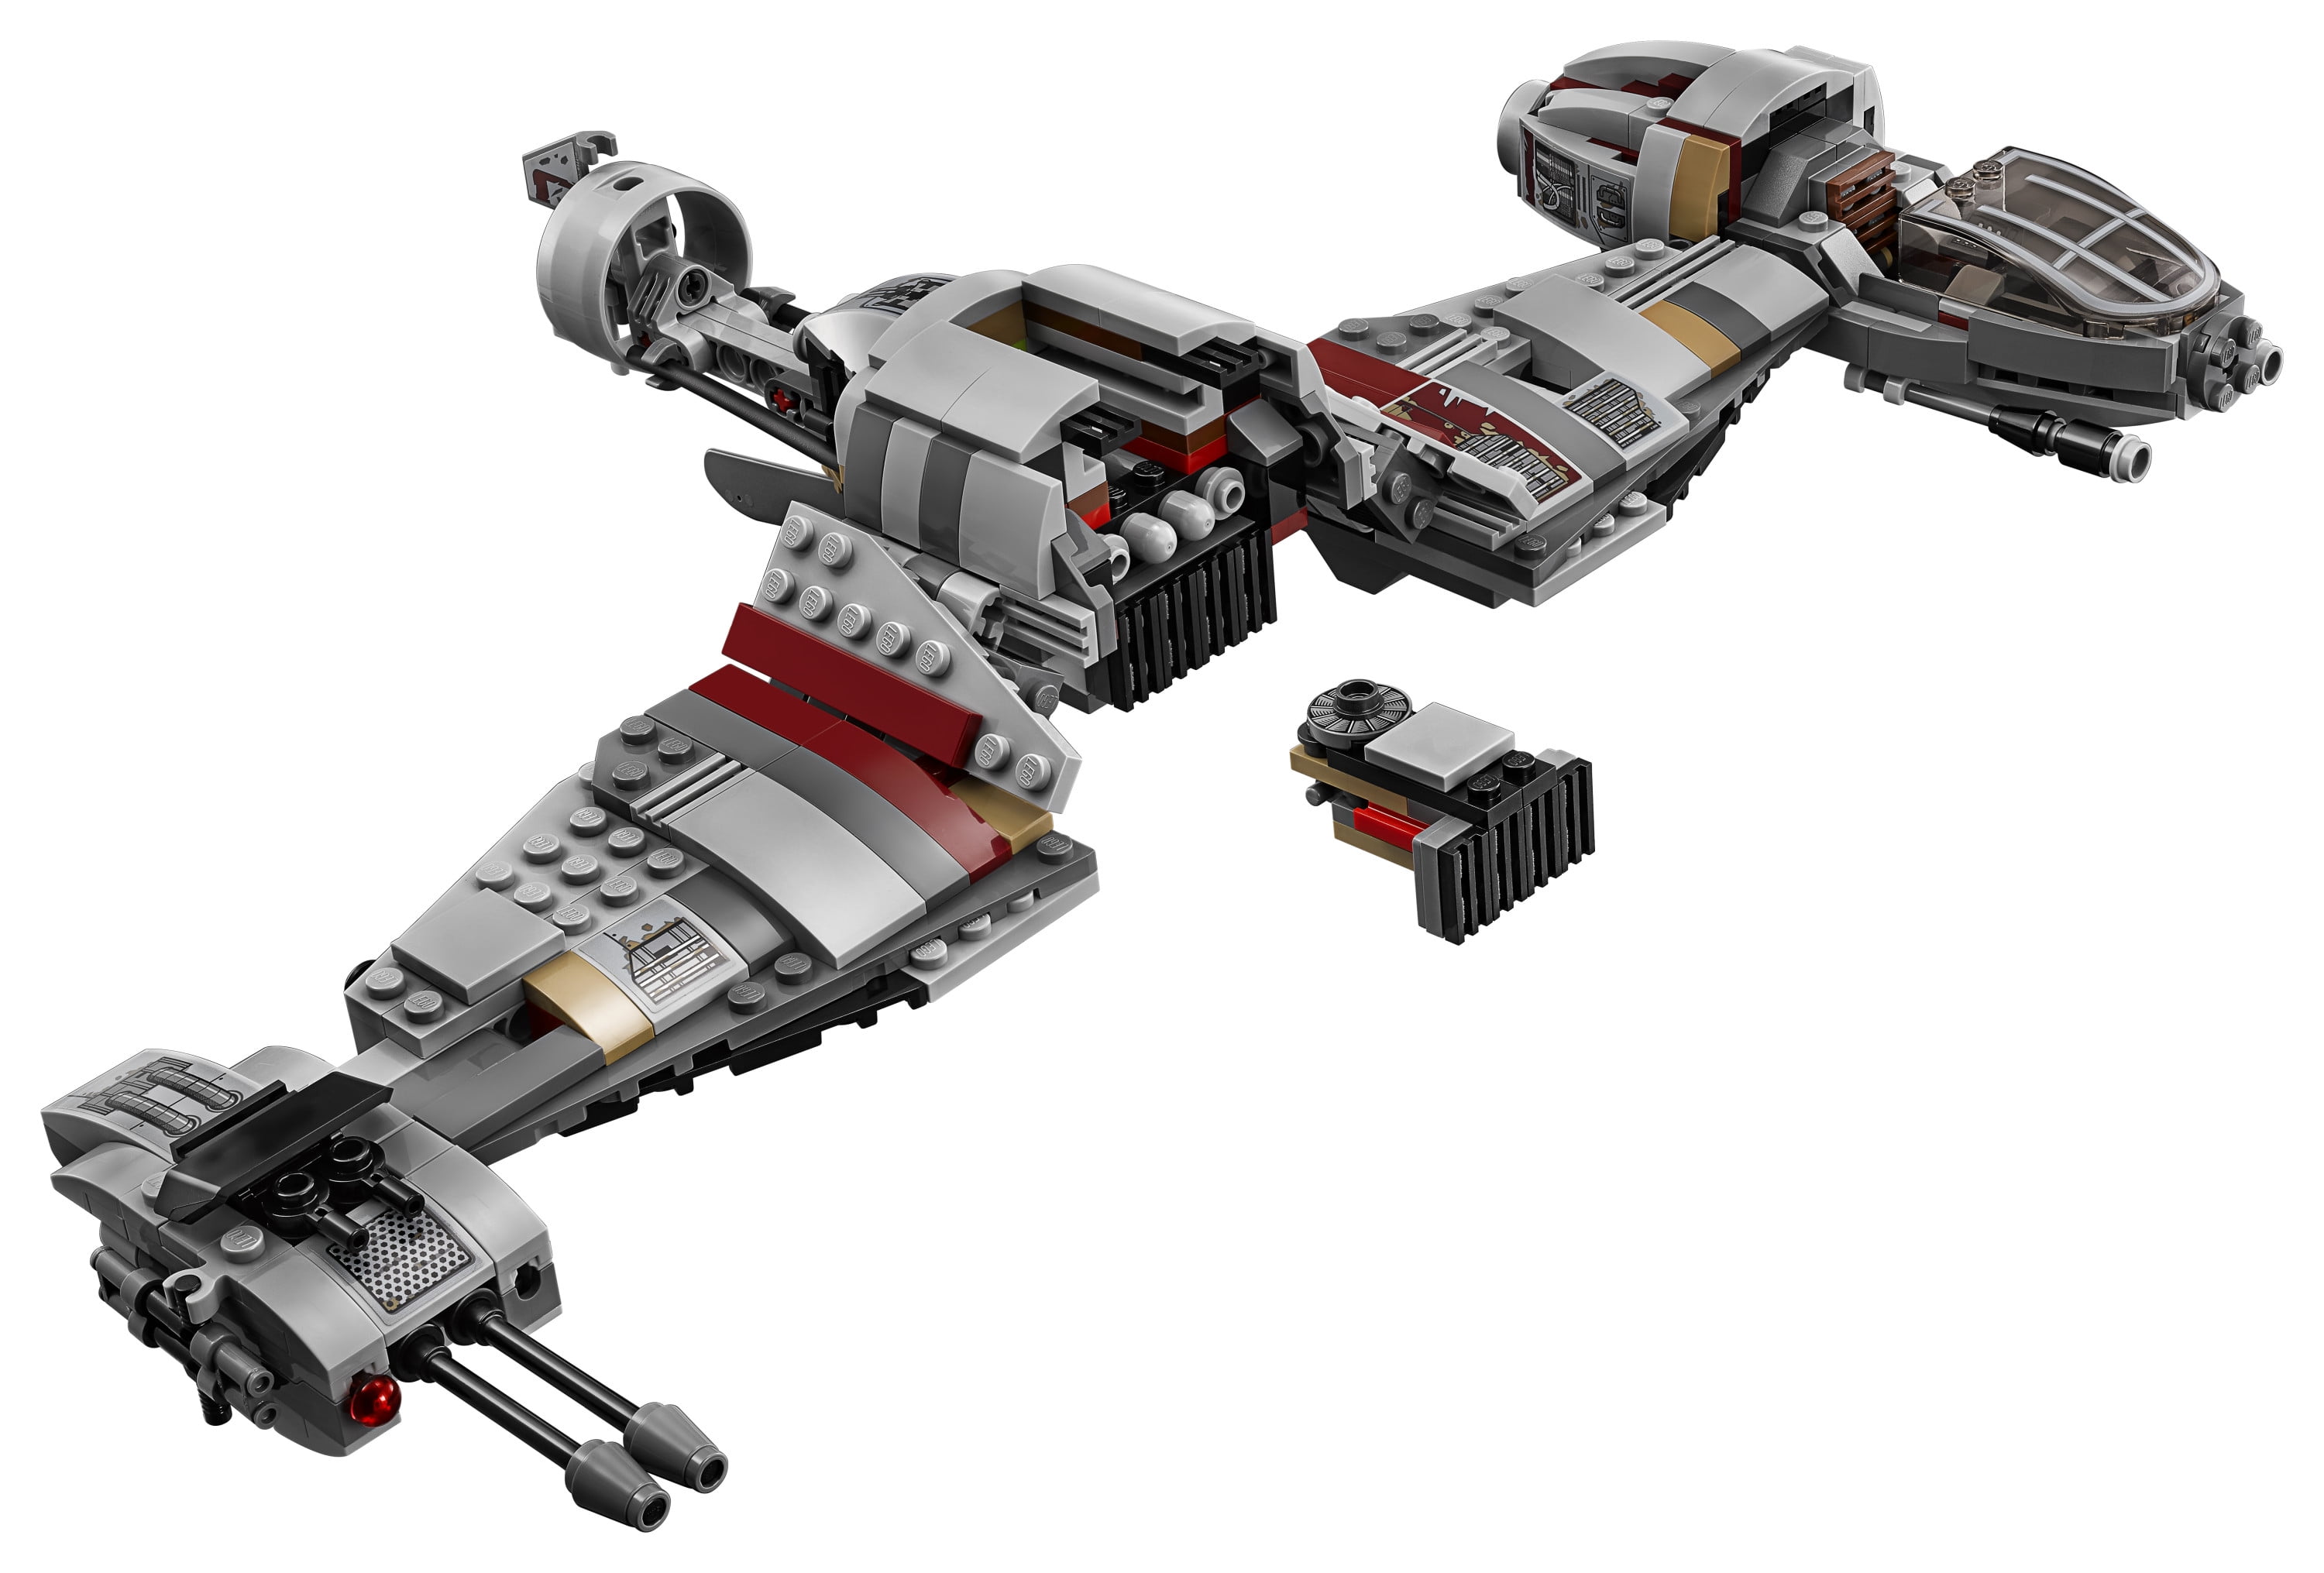 LEGO STAR WARS Admiral Ematt MINIFIG new from Lego set #75202 New